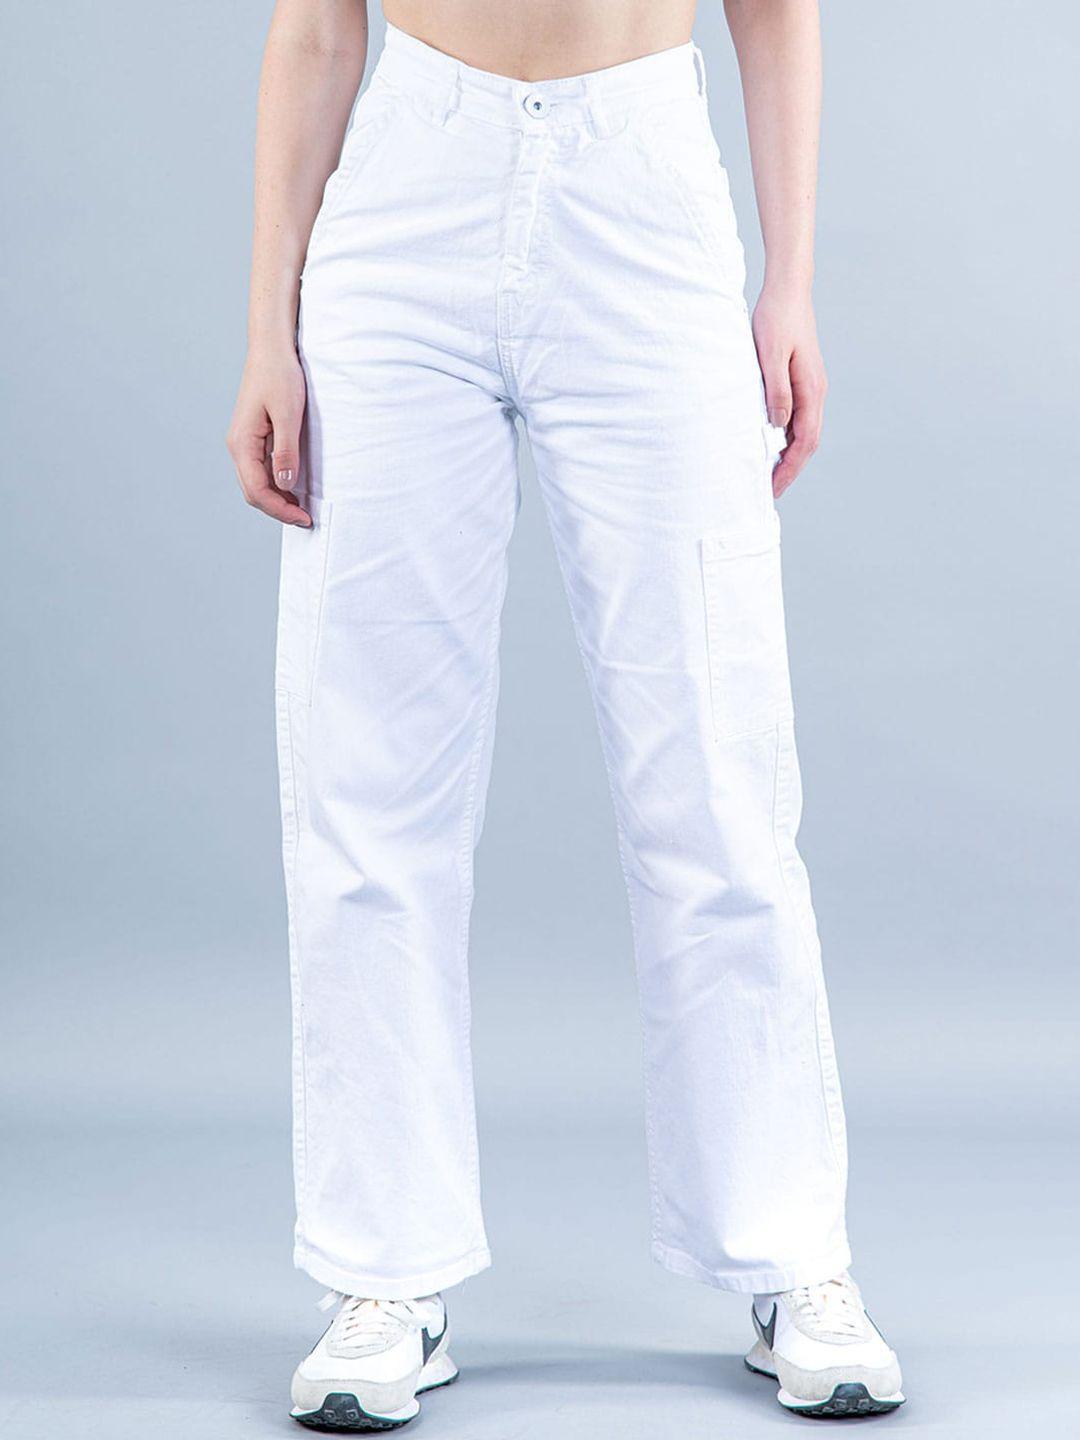 tistabene-women-comfort-clean-look-cotton-jeans